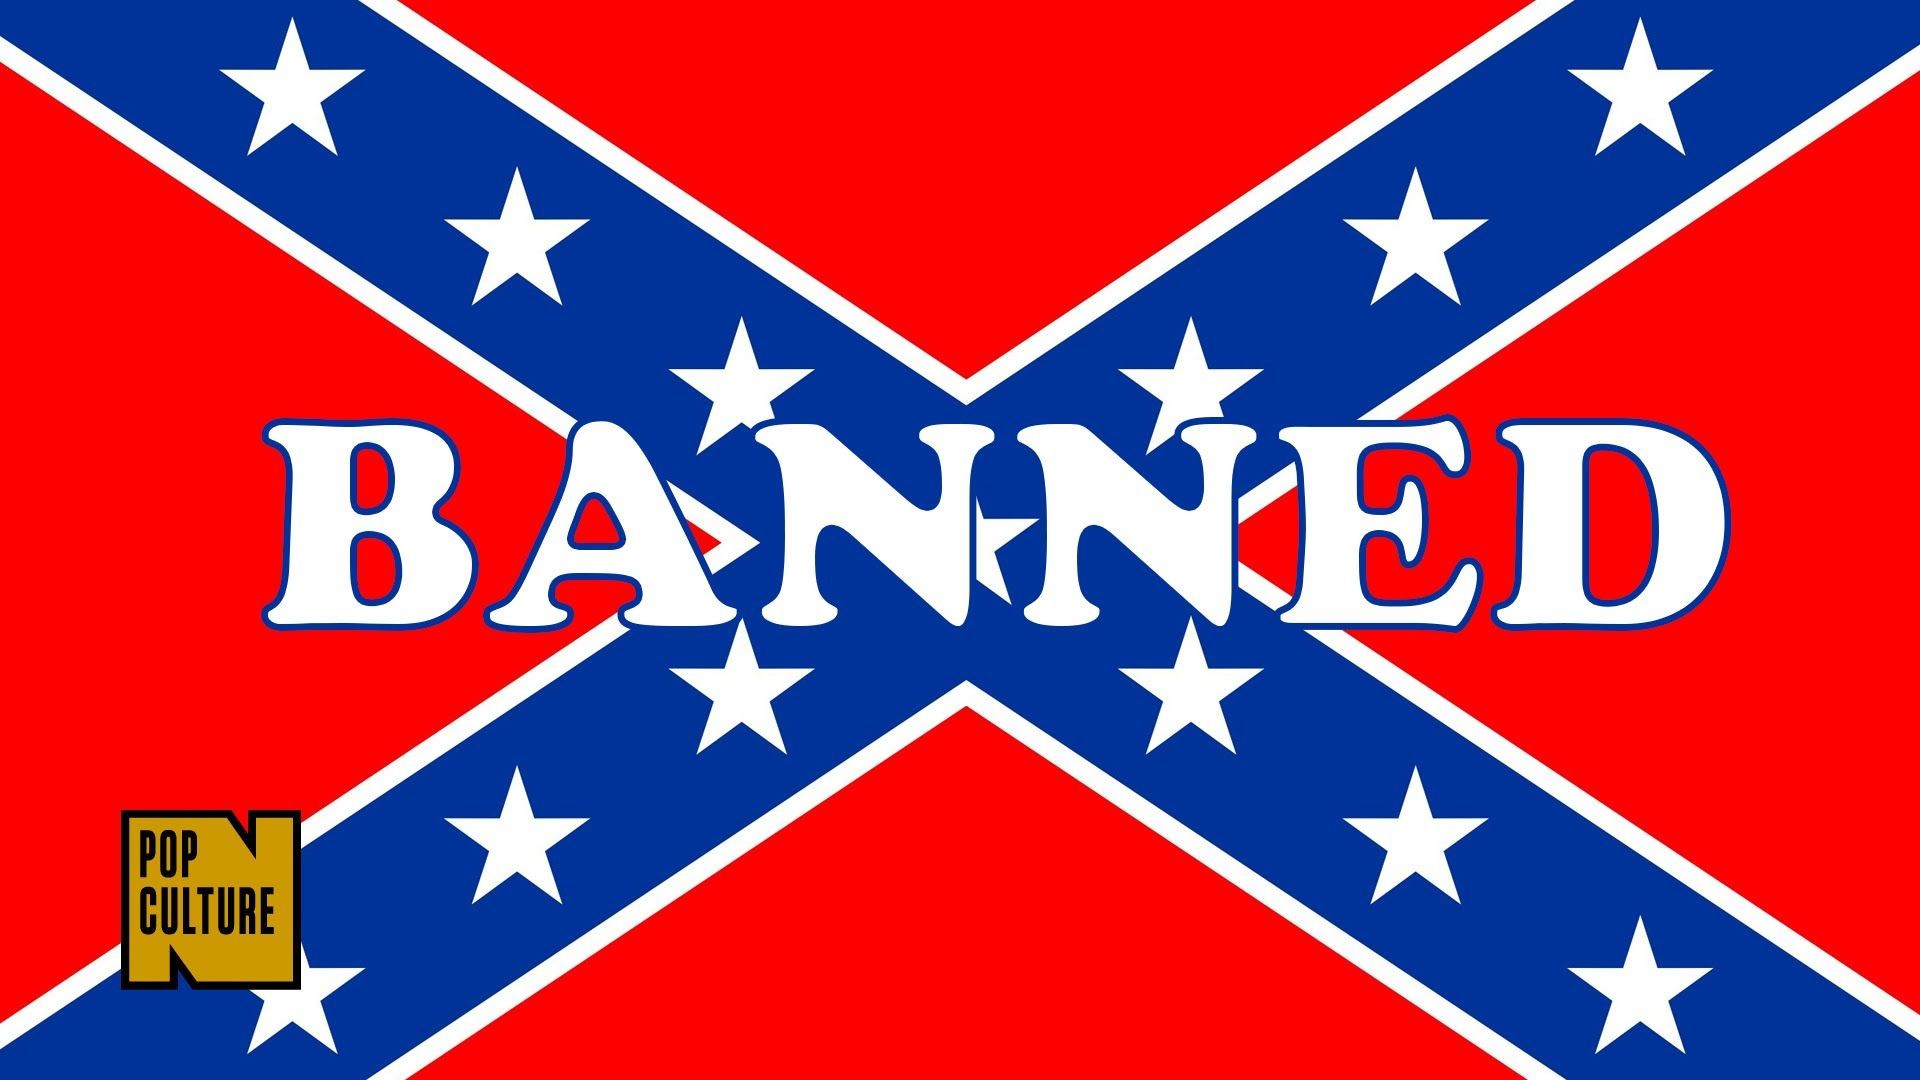 1920x1080 Free Download Confederate Flag Full HD Background Properties Â· rebel flag  wallpaper ...